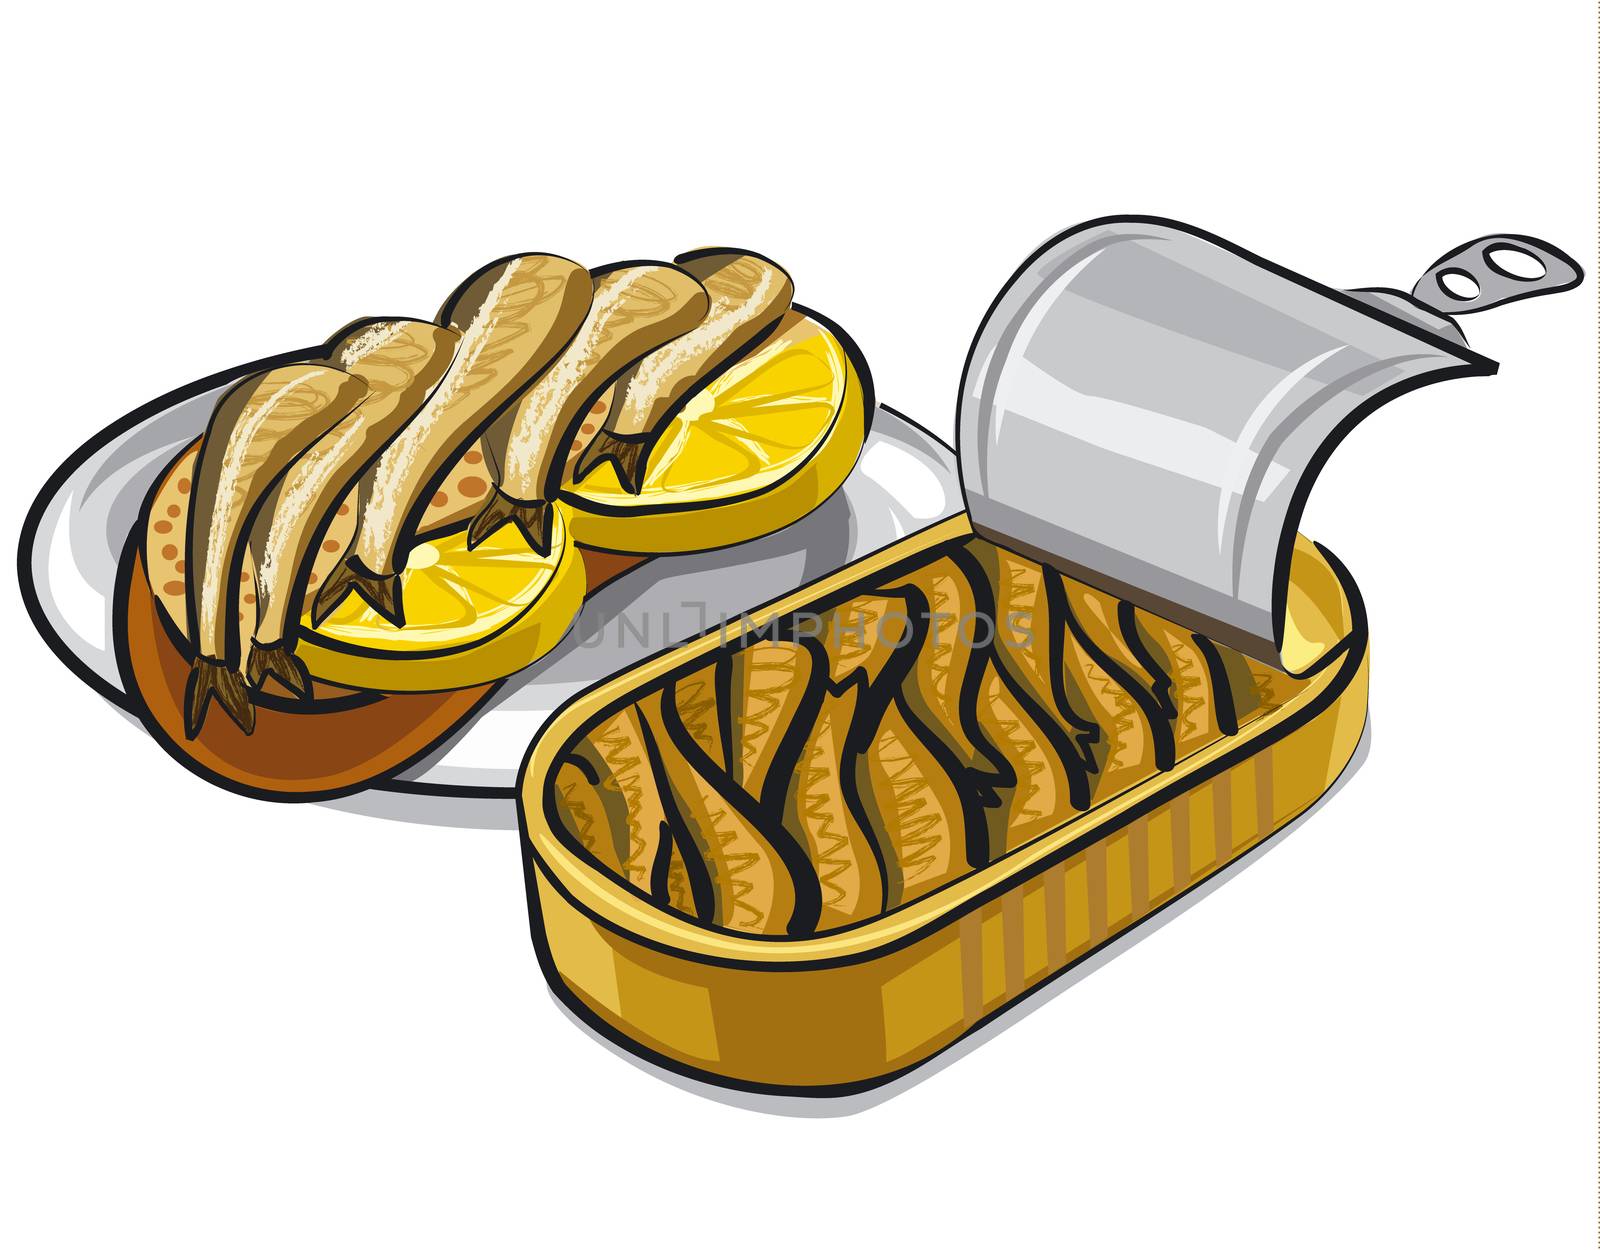 canned smoked sprats by olegtoka